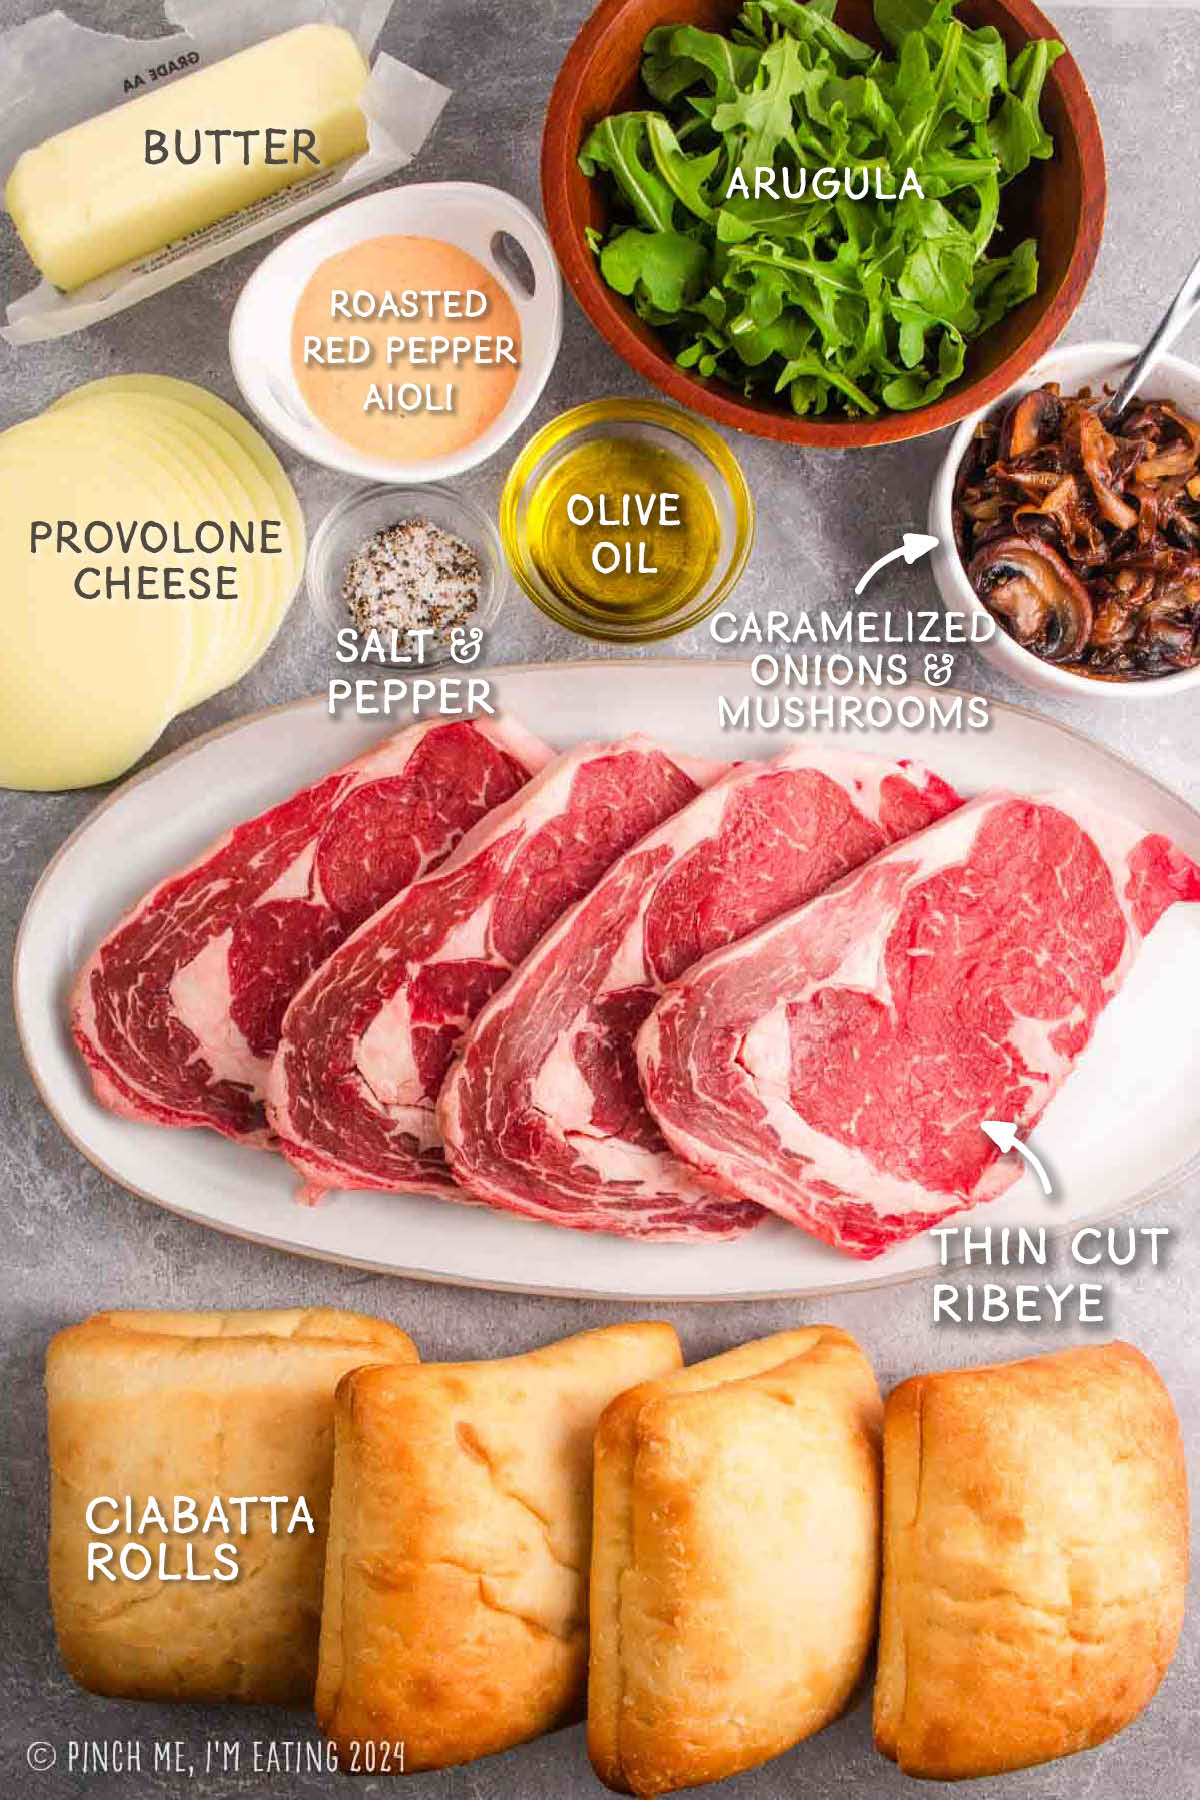 Ingredients for a grilled ribeye steak sandwich.